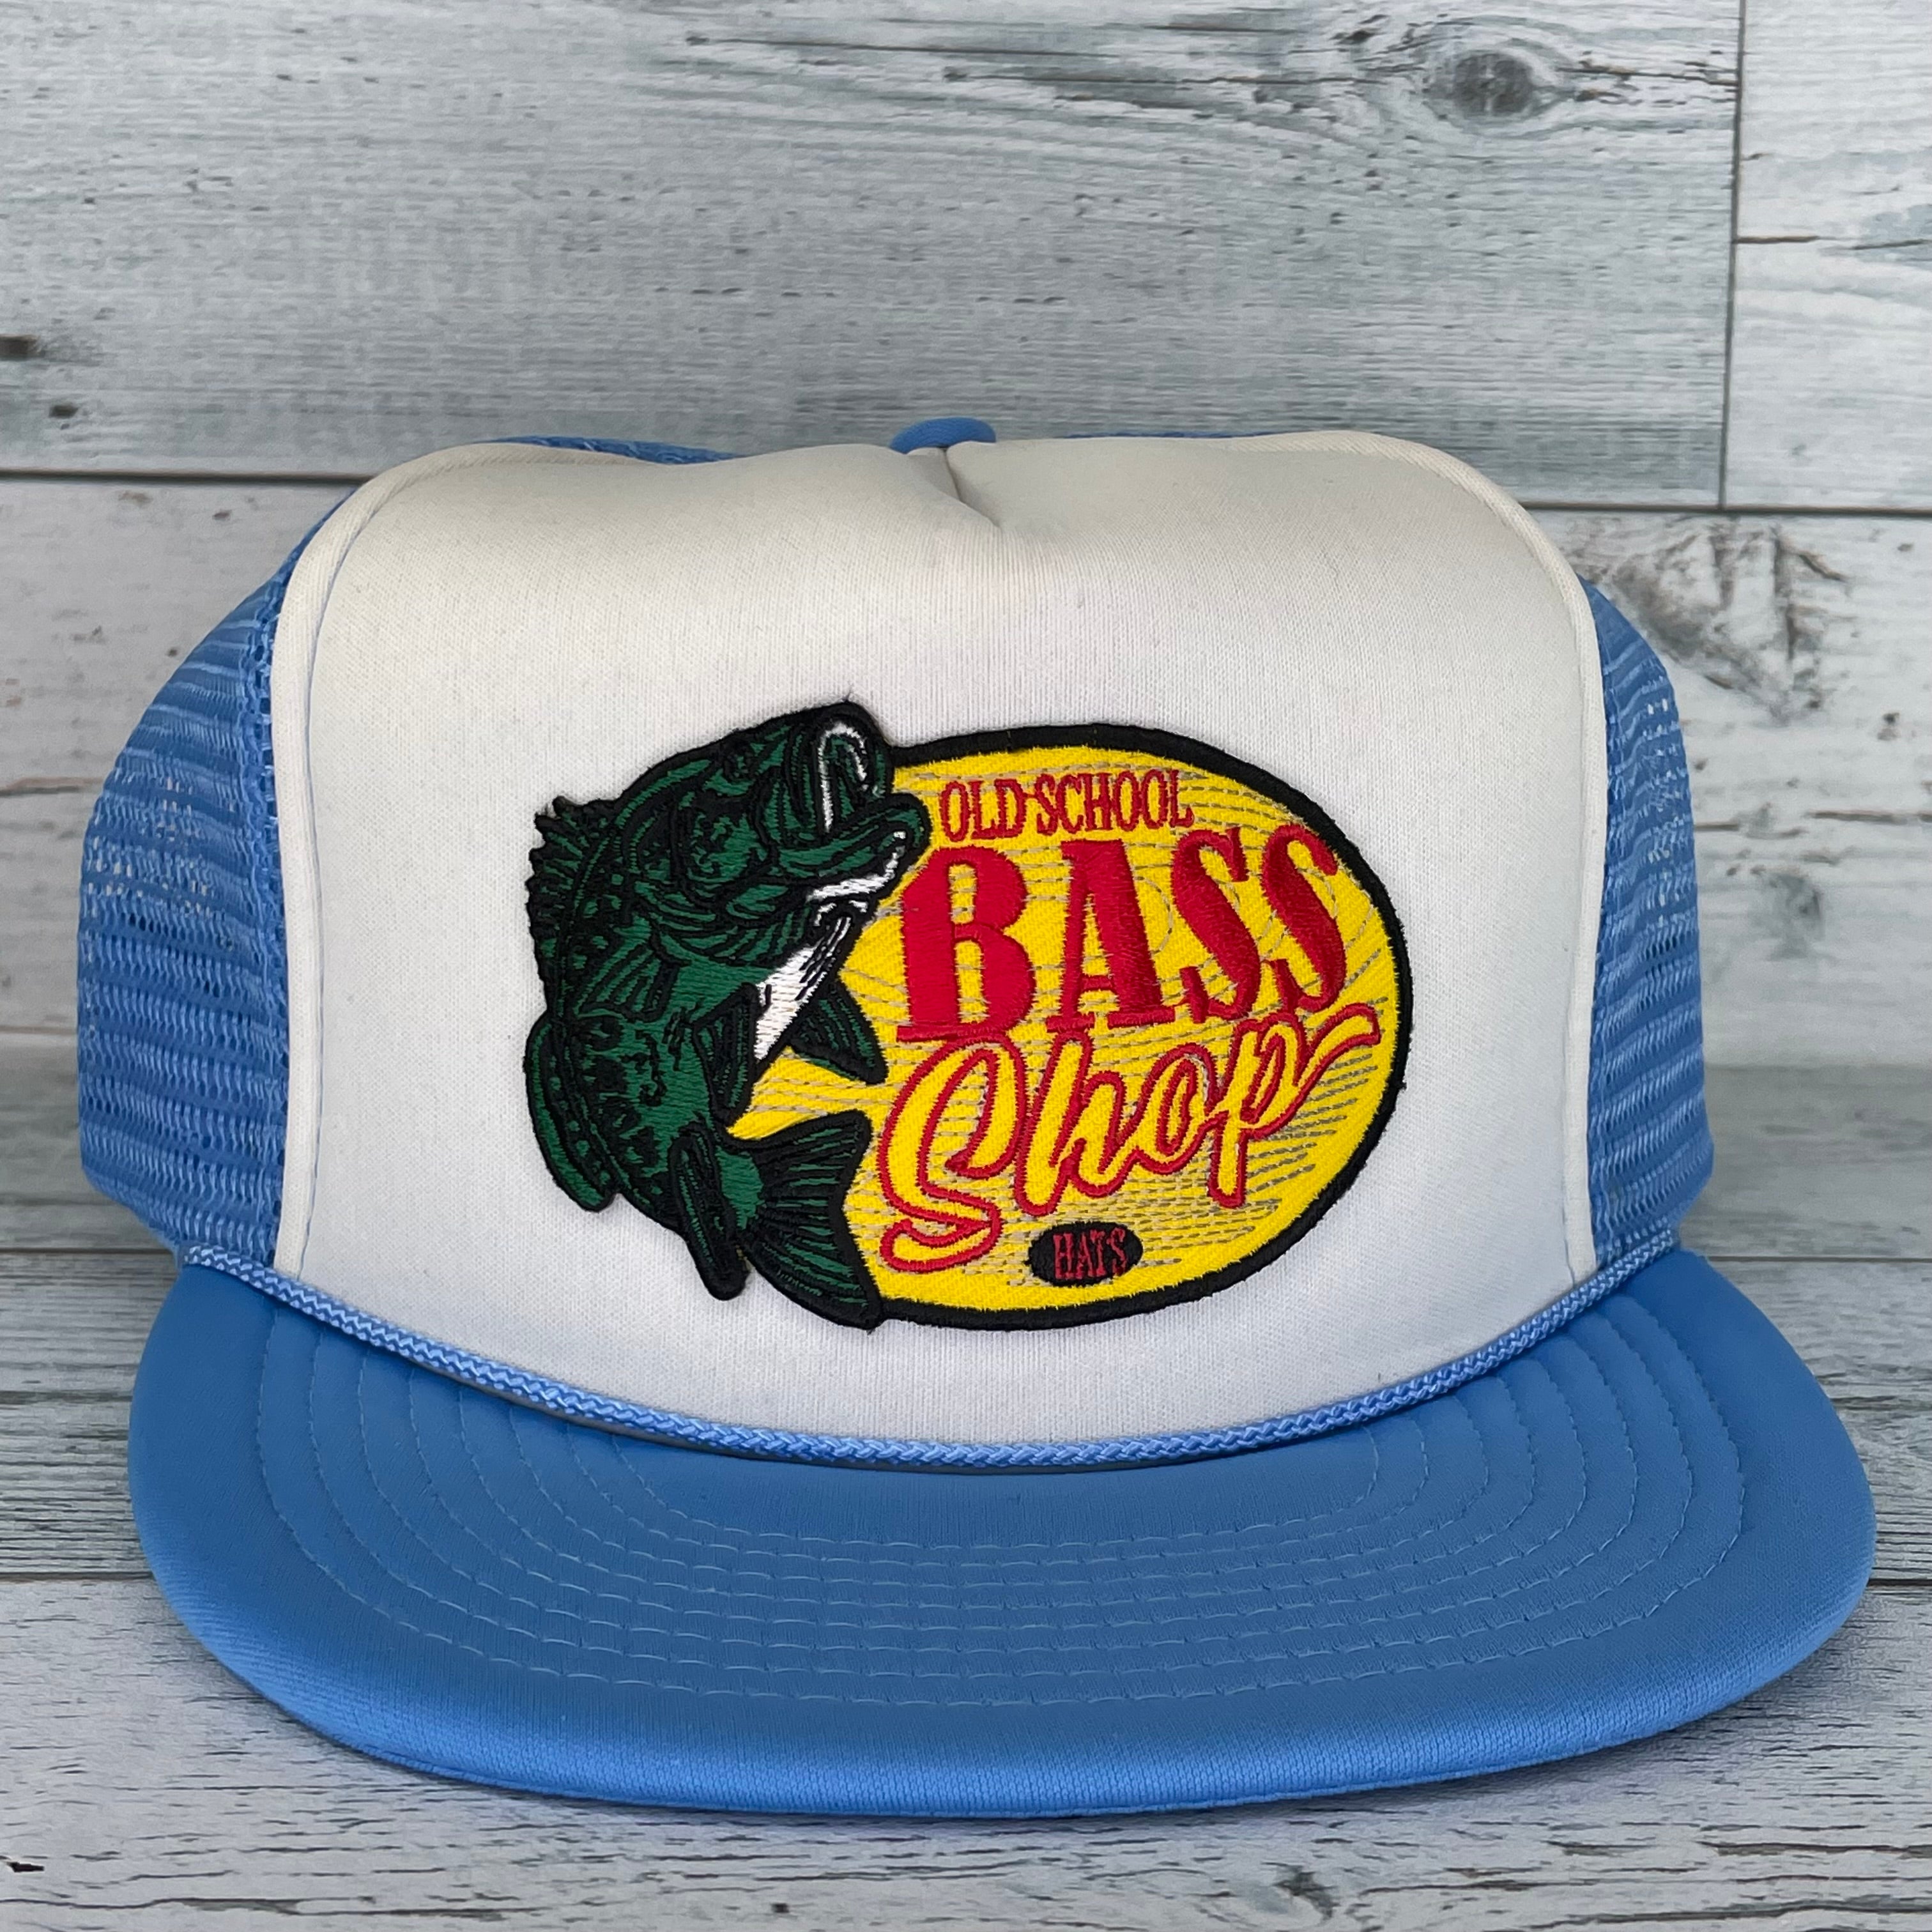 Old School Blue Bass Fishing Mesh Trucker Snapback Cap Hat